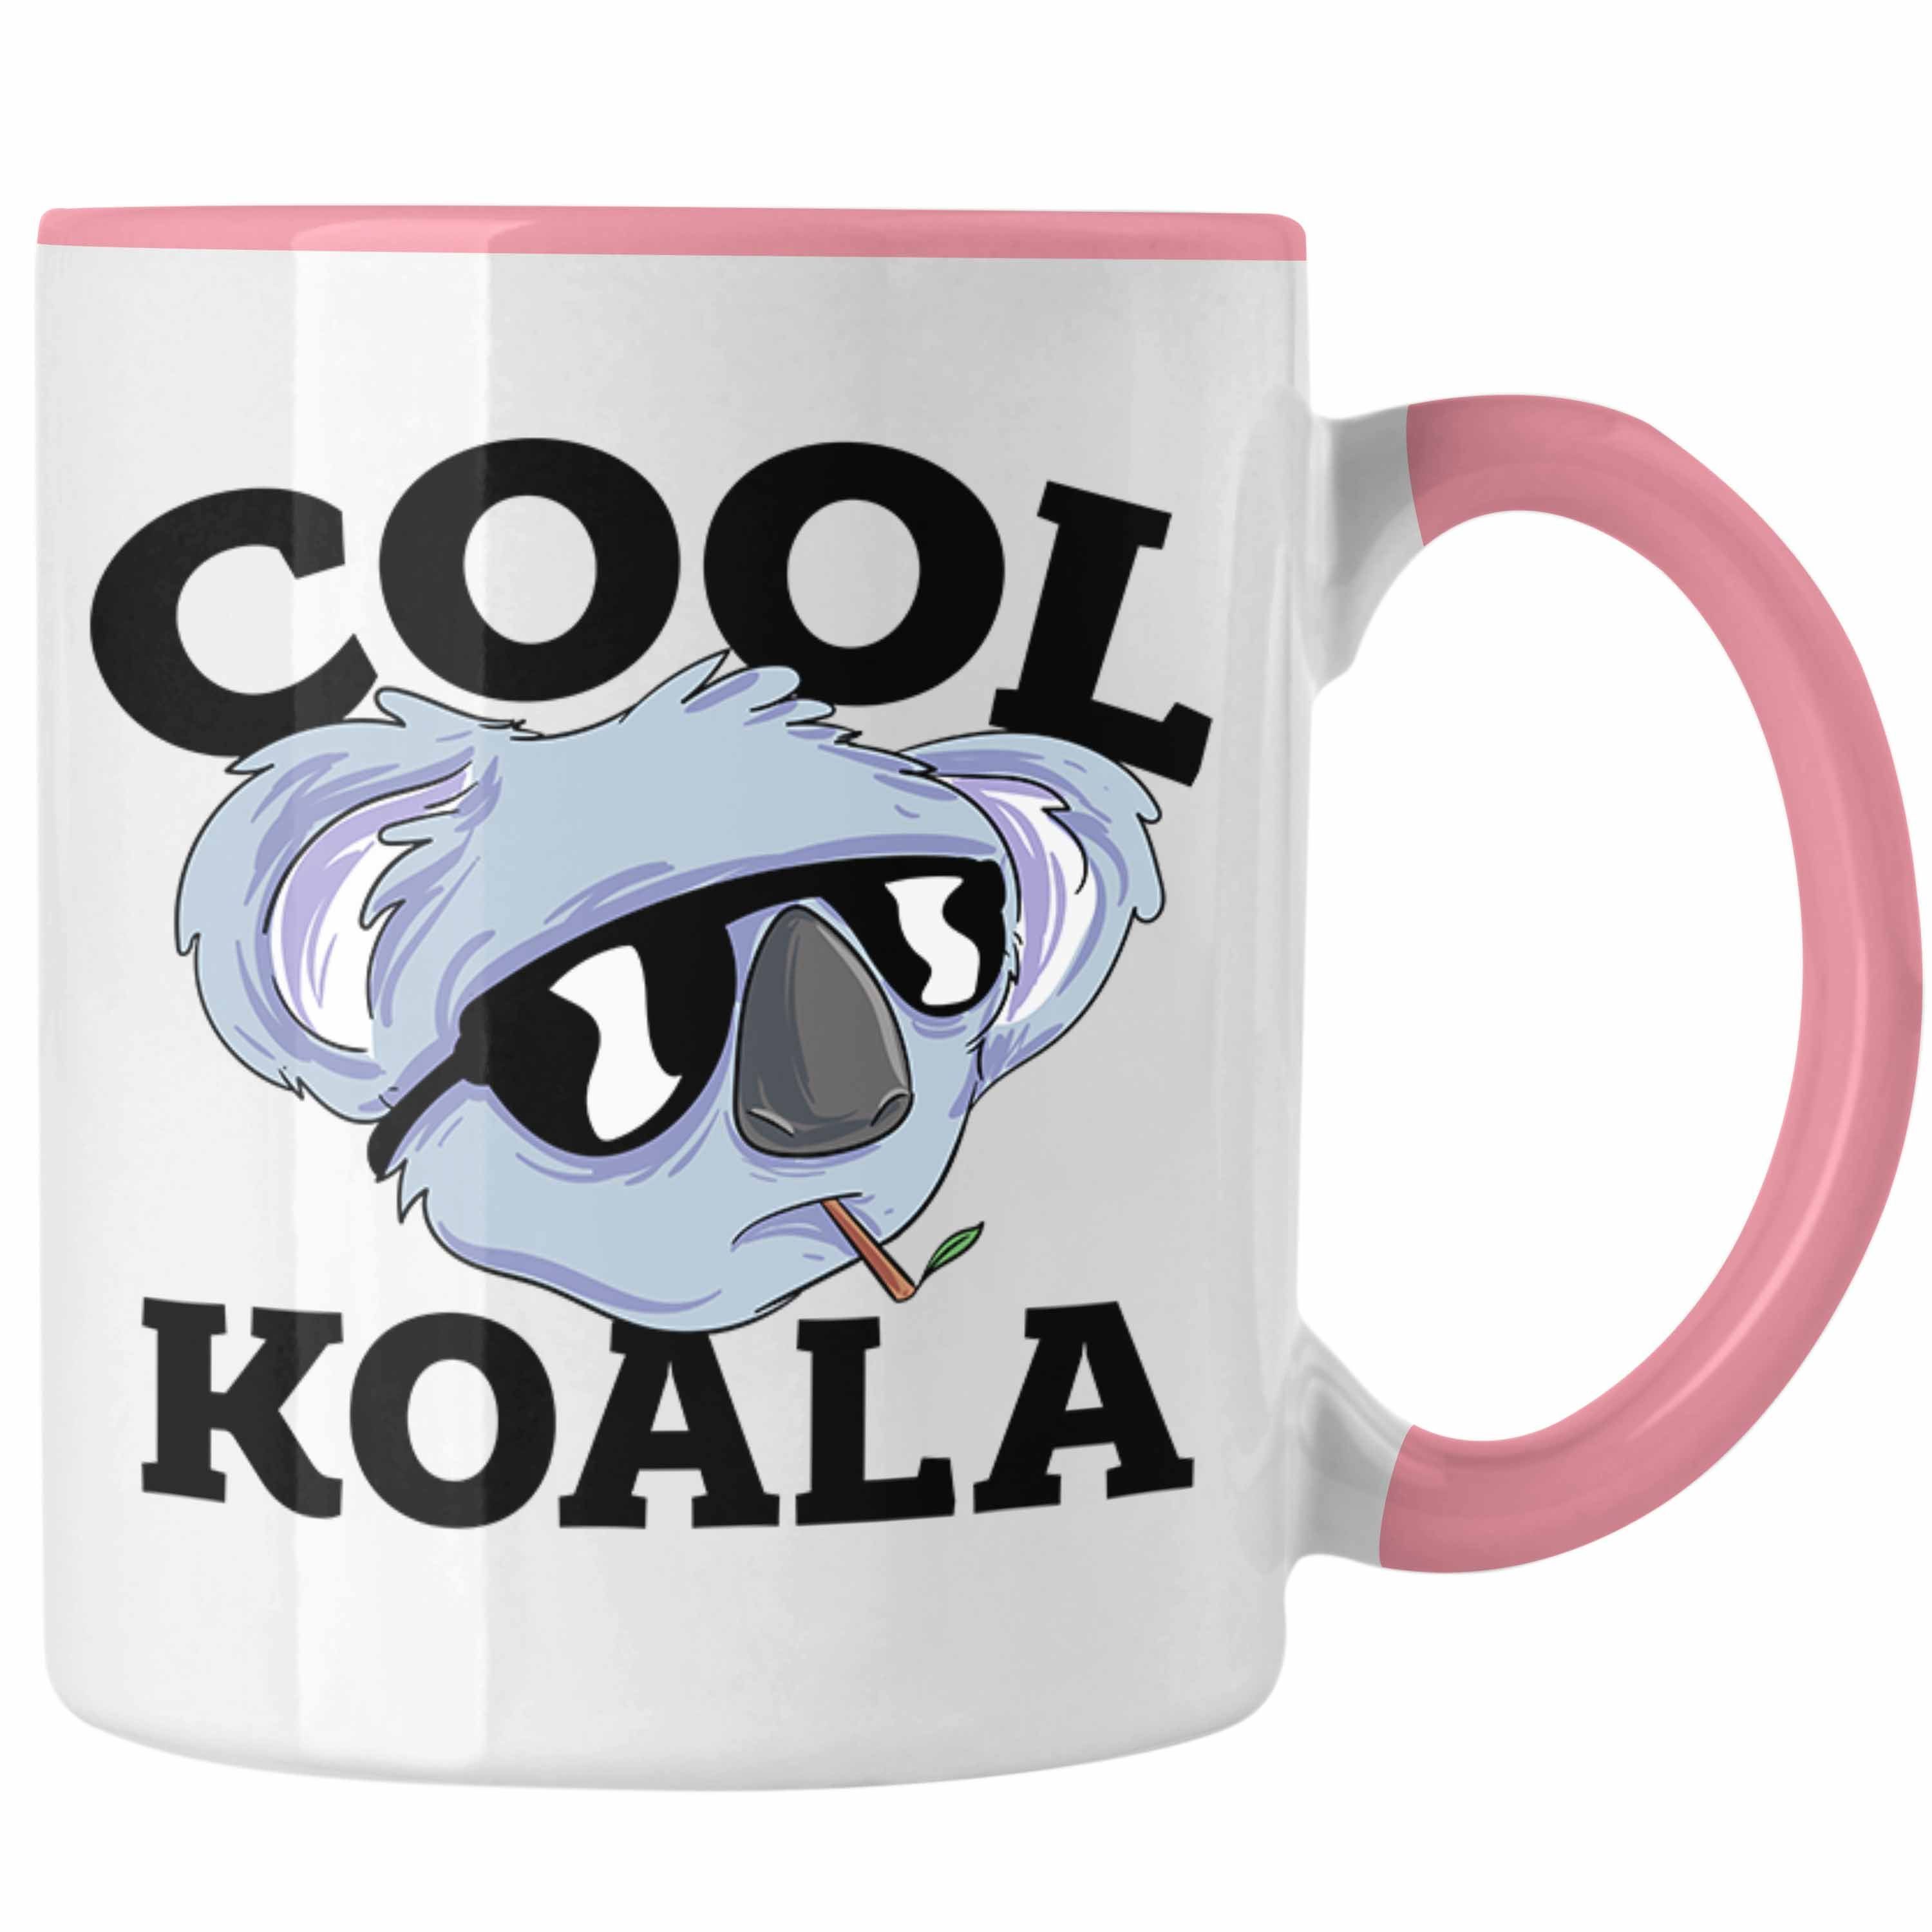 Trendation Tasse Tasse Koala Geschenkidee für Koala-Liebhaber Tasse Koala-Aufdruck Rosa